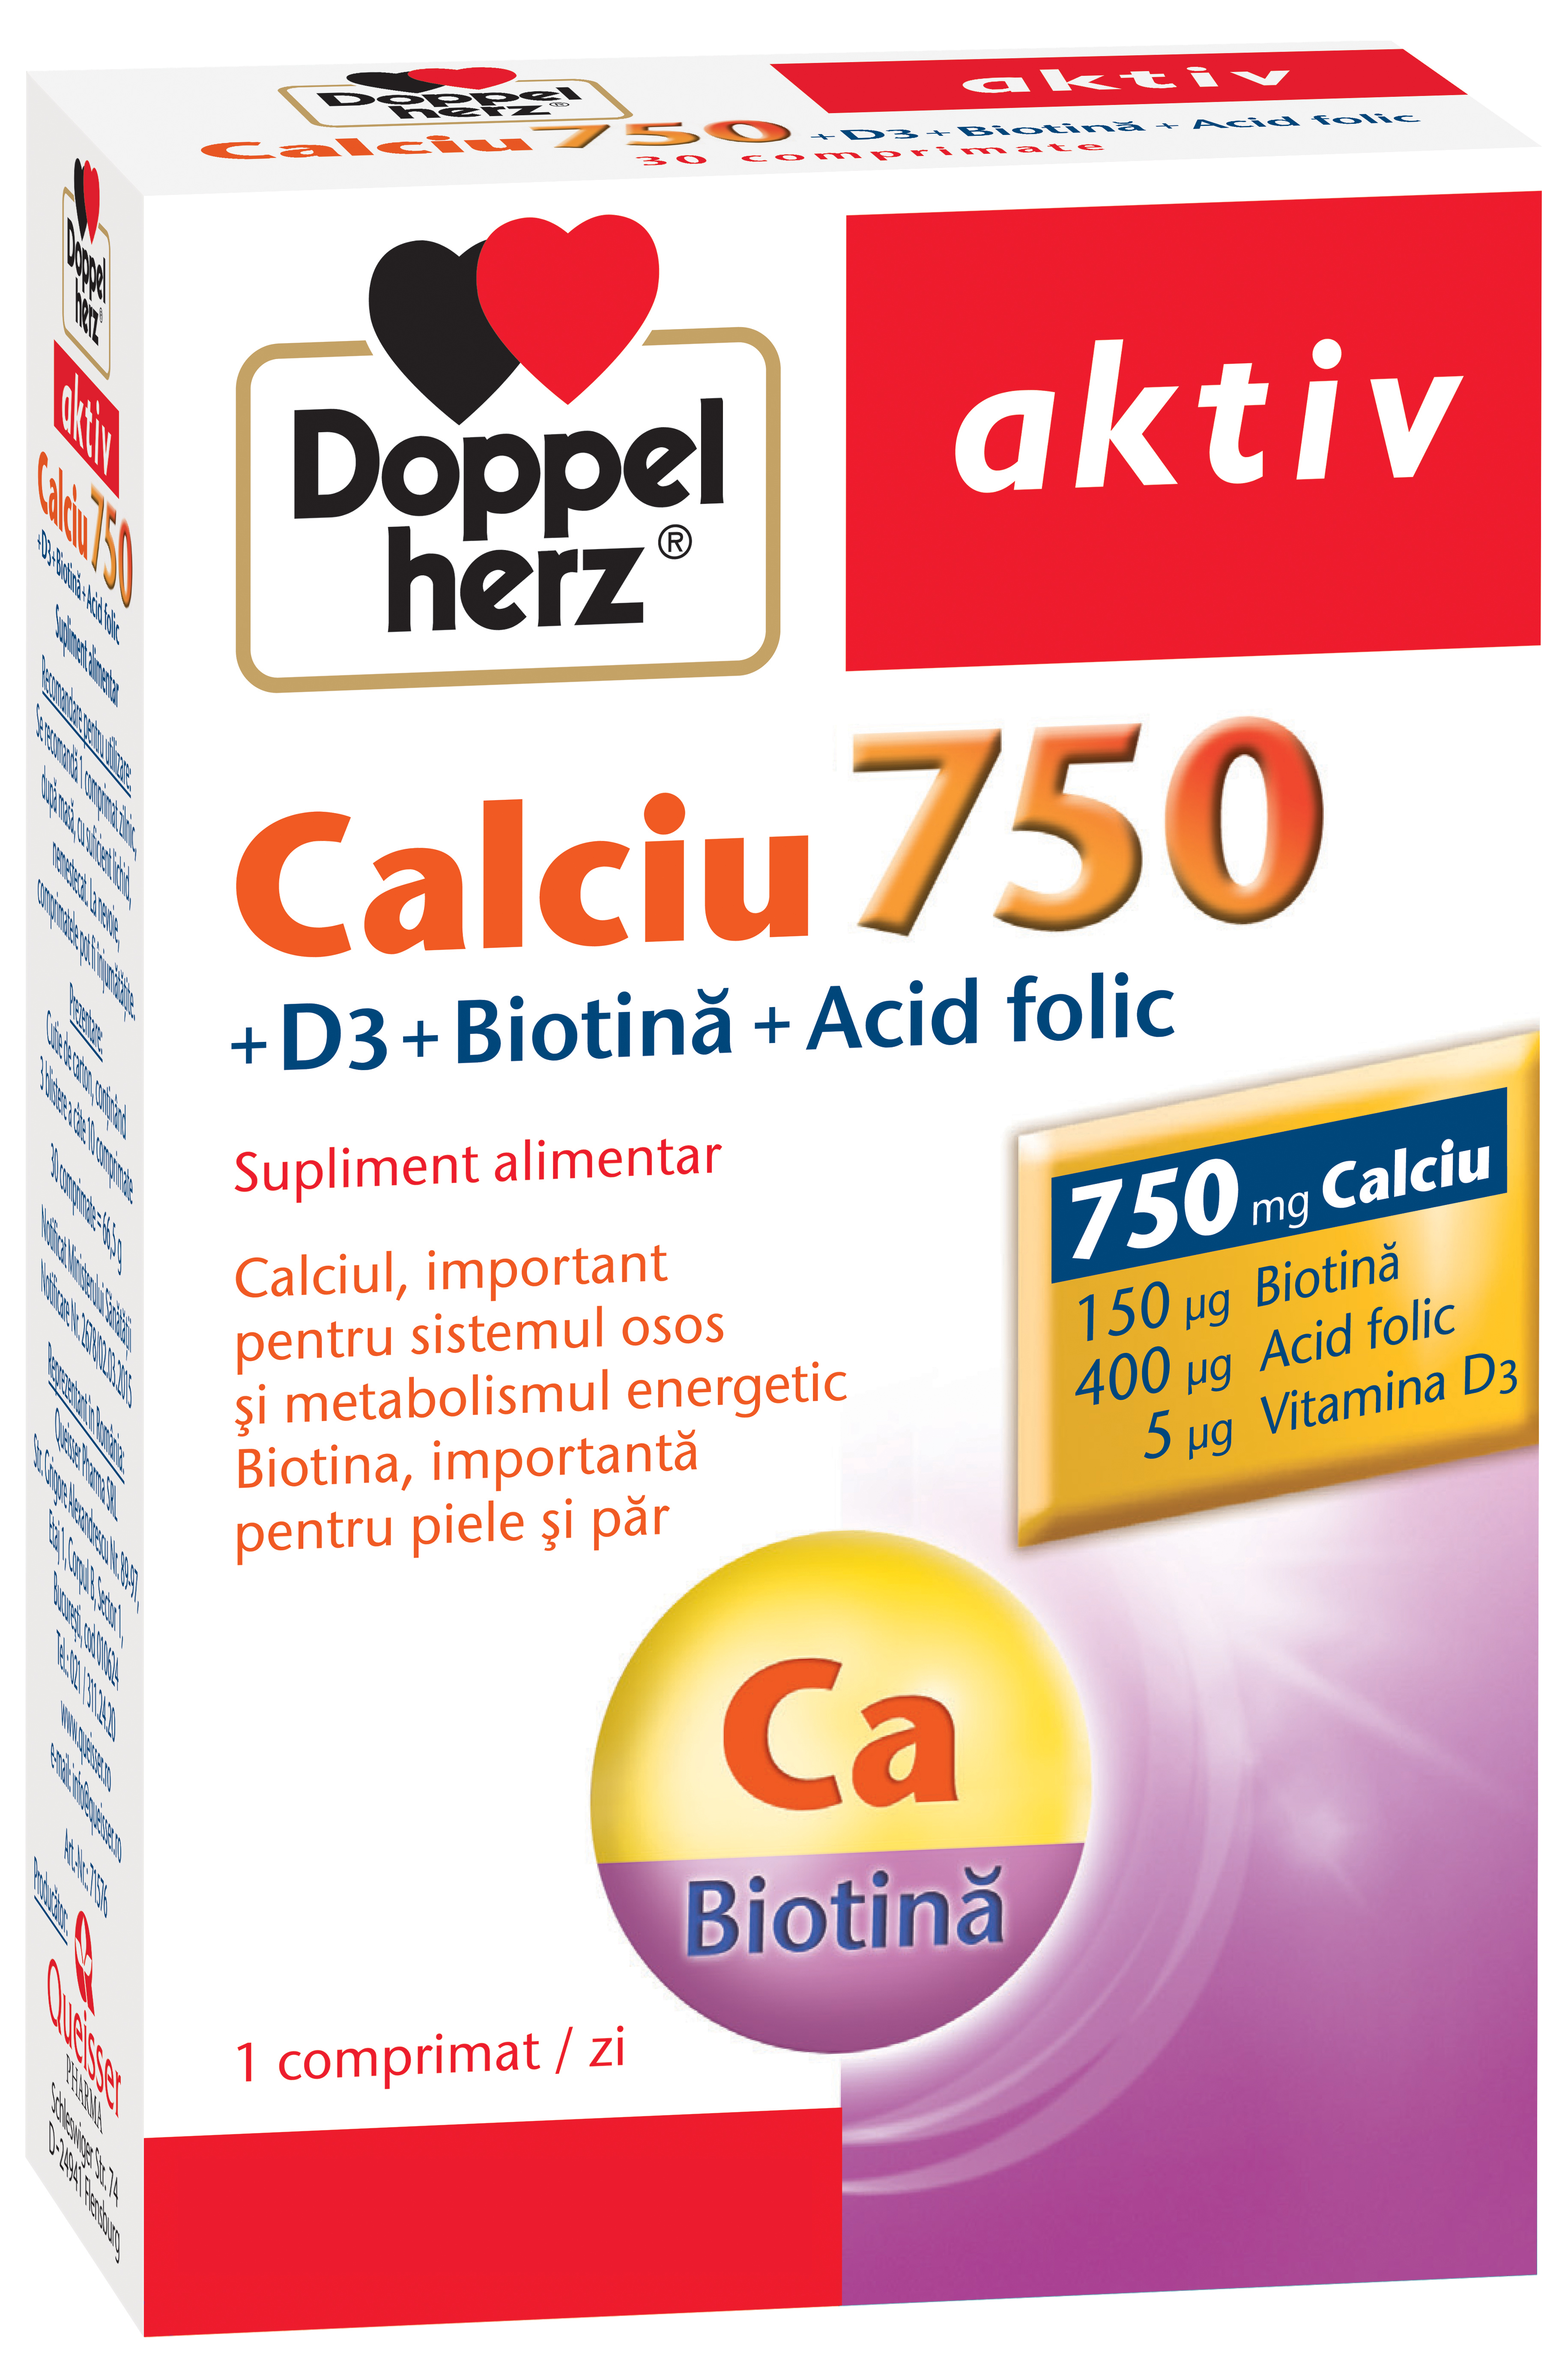 Uz general - Doppelherz Aktiv Calciu 750 + D3 + Bitoină + Acid Folic, 30 comprimate, sinapis.ro